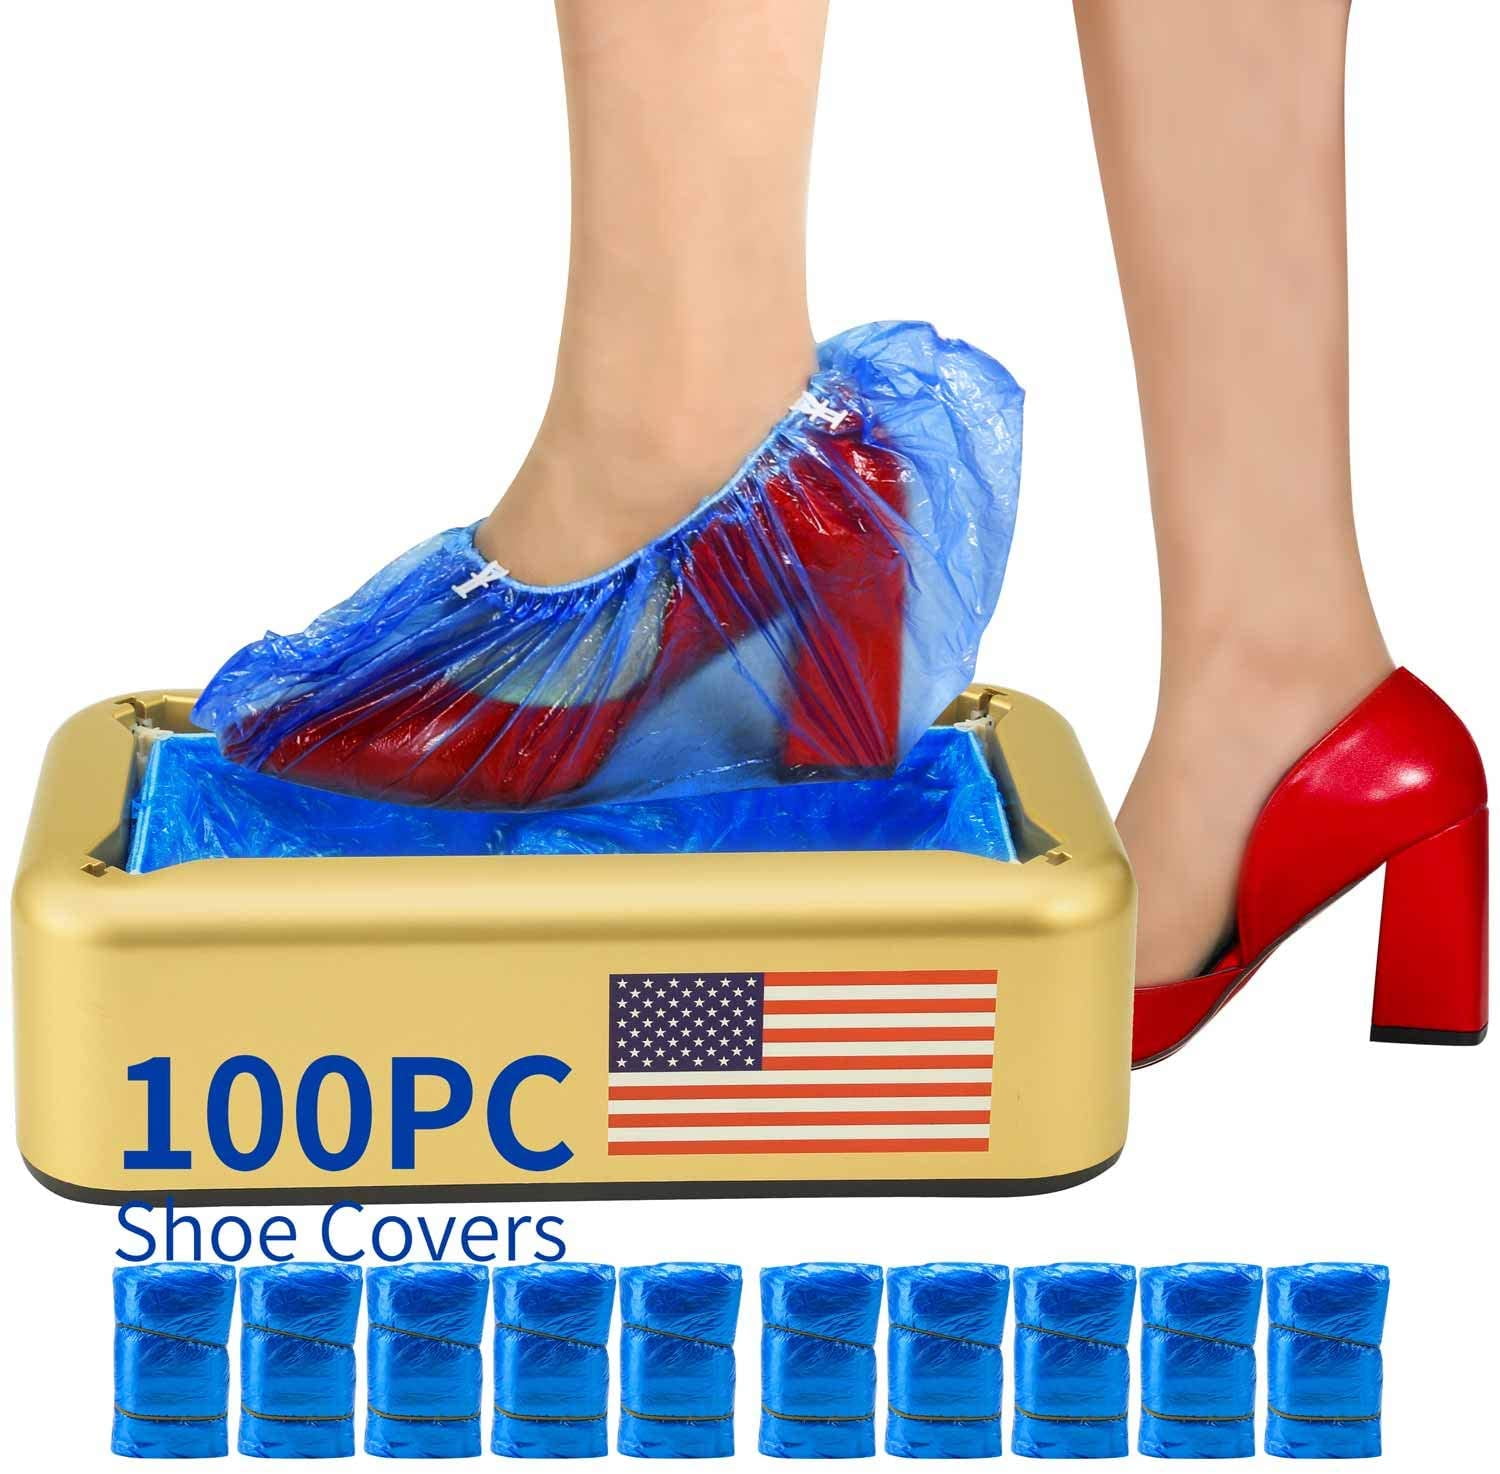 Details about   100pcs T Type Disposable Shoe Covers for Dispenser Automatic Shoe Cover Machine 